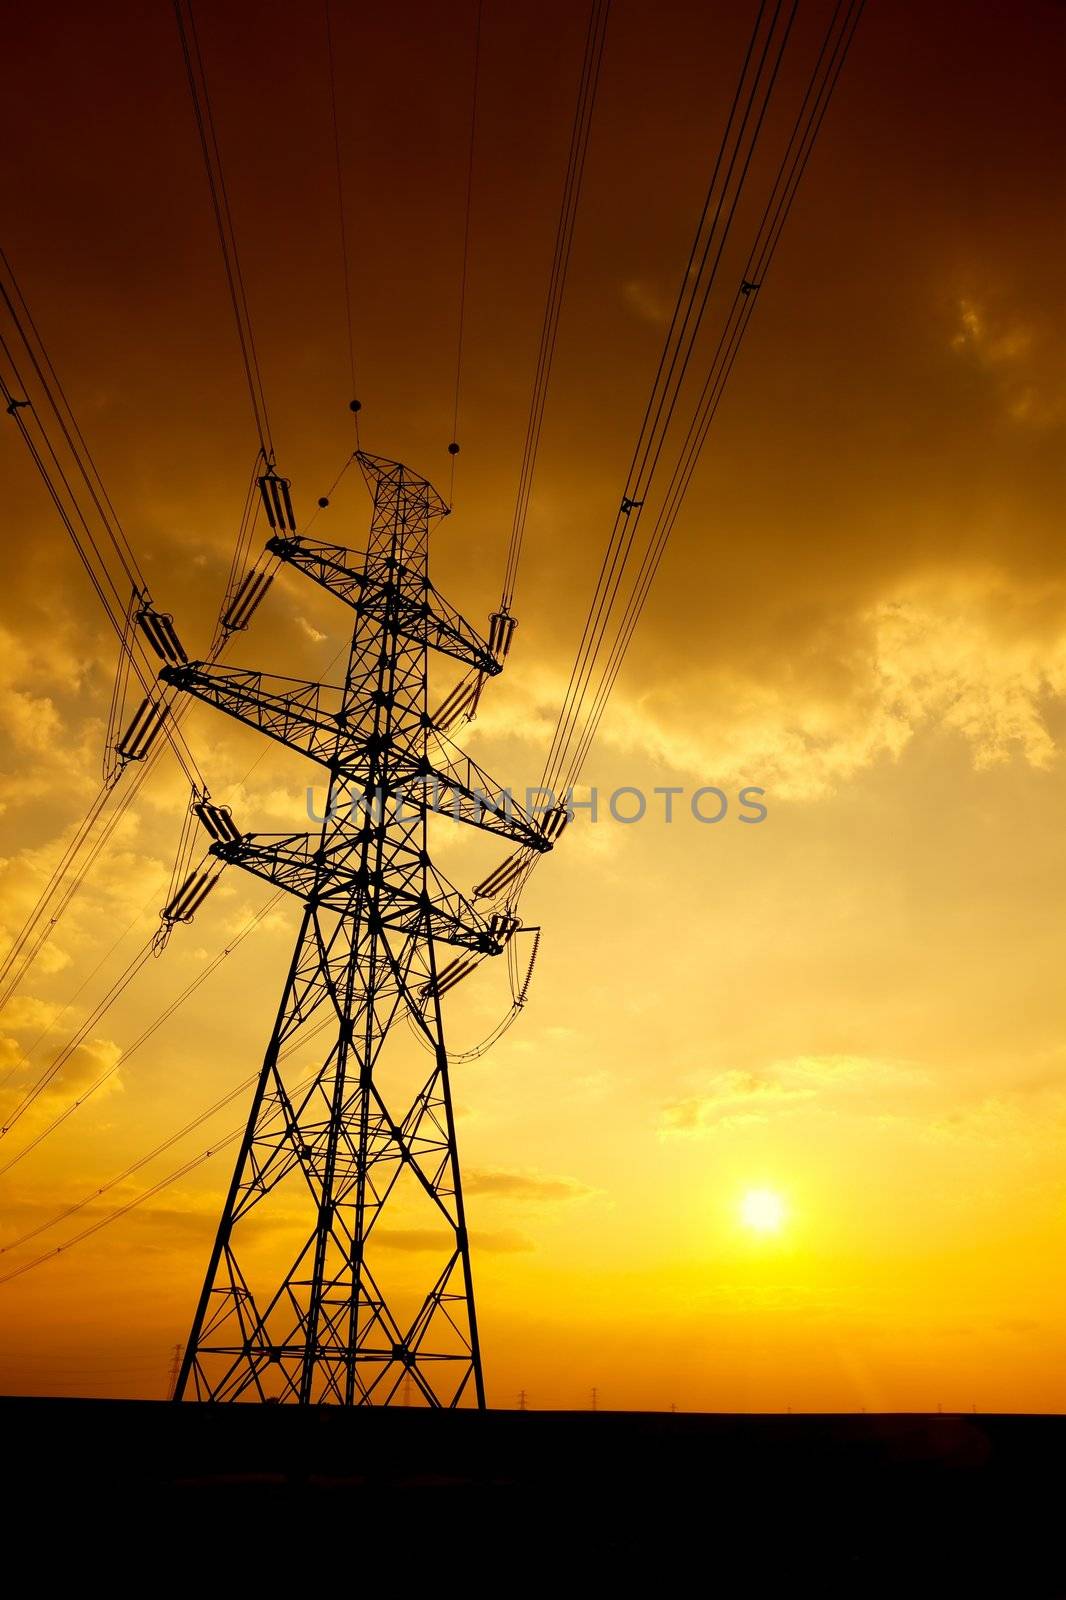 Electricity by Gudella